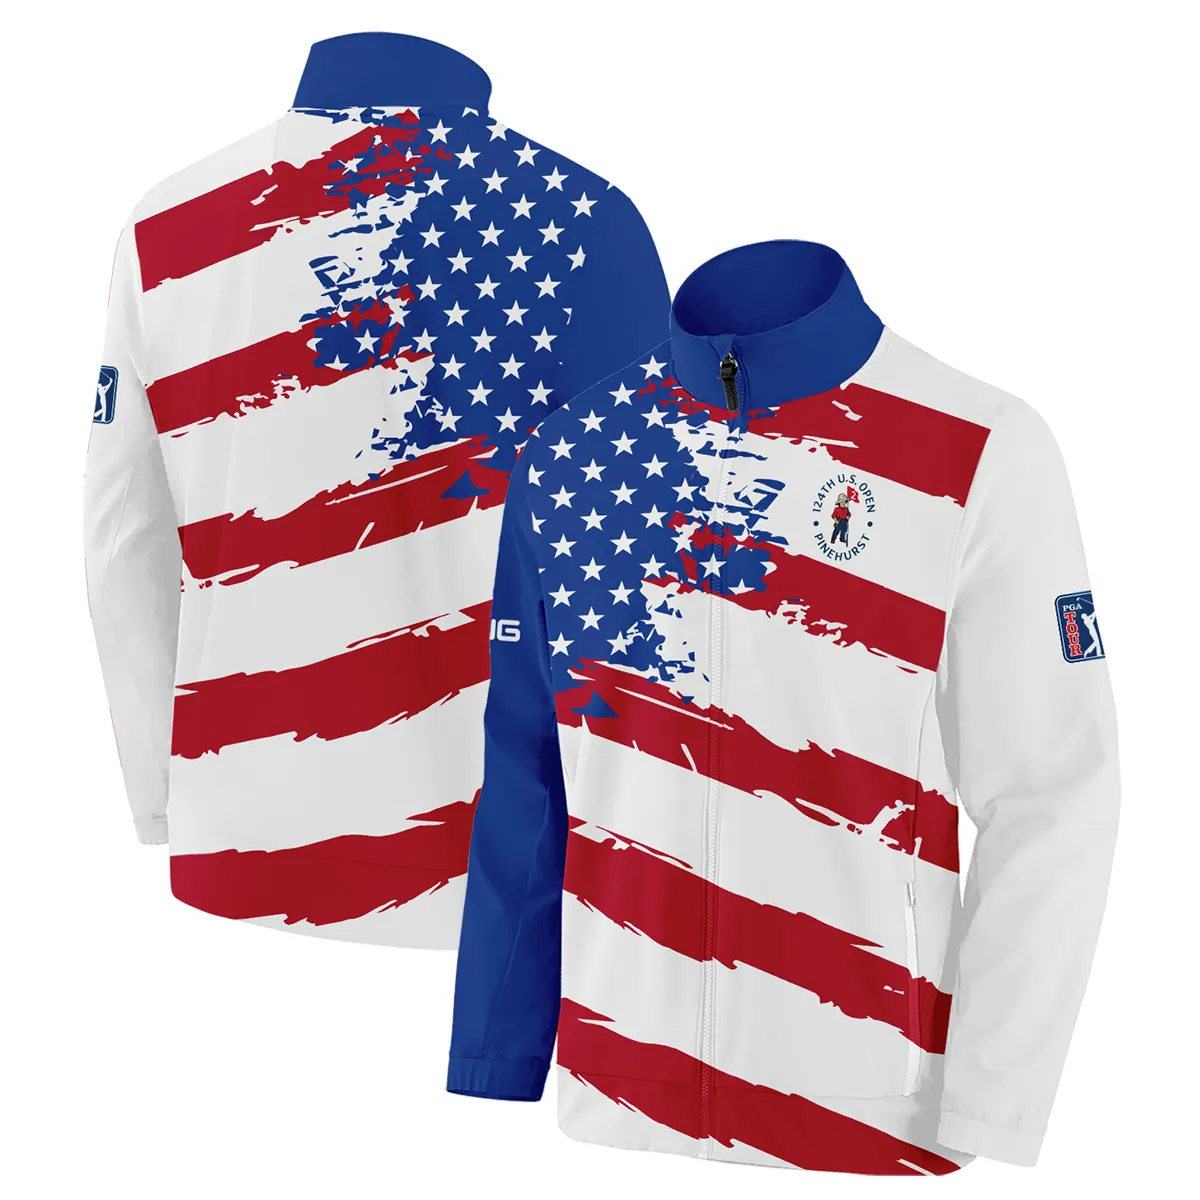 Sports Ping 124th U.S. Open Pinehurst Sleeveless Jacket USA Flag Grunge White All Over Print Sleeveless Jacket